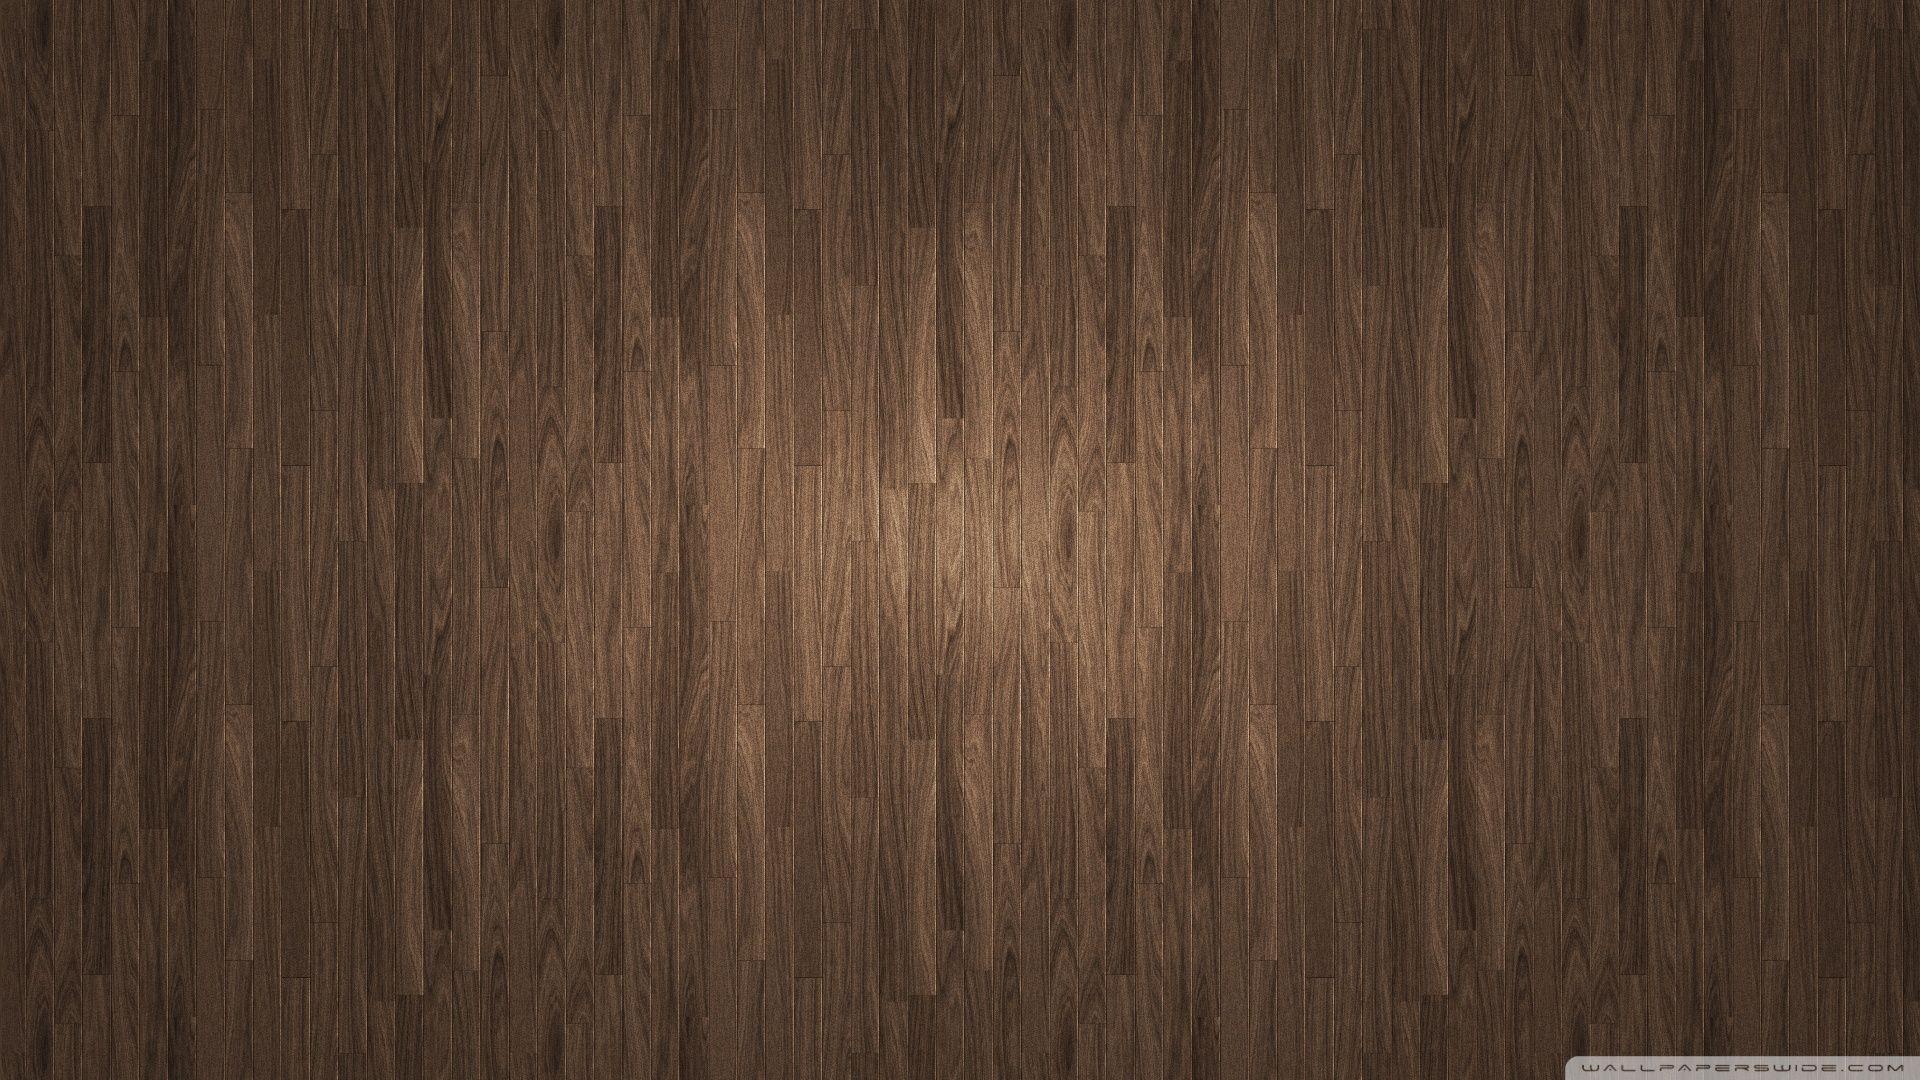 Wood Background HD desktop wallpaper, High Definition